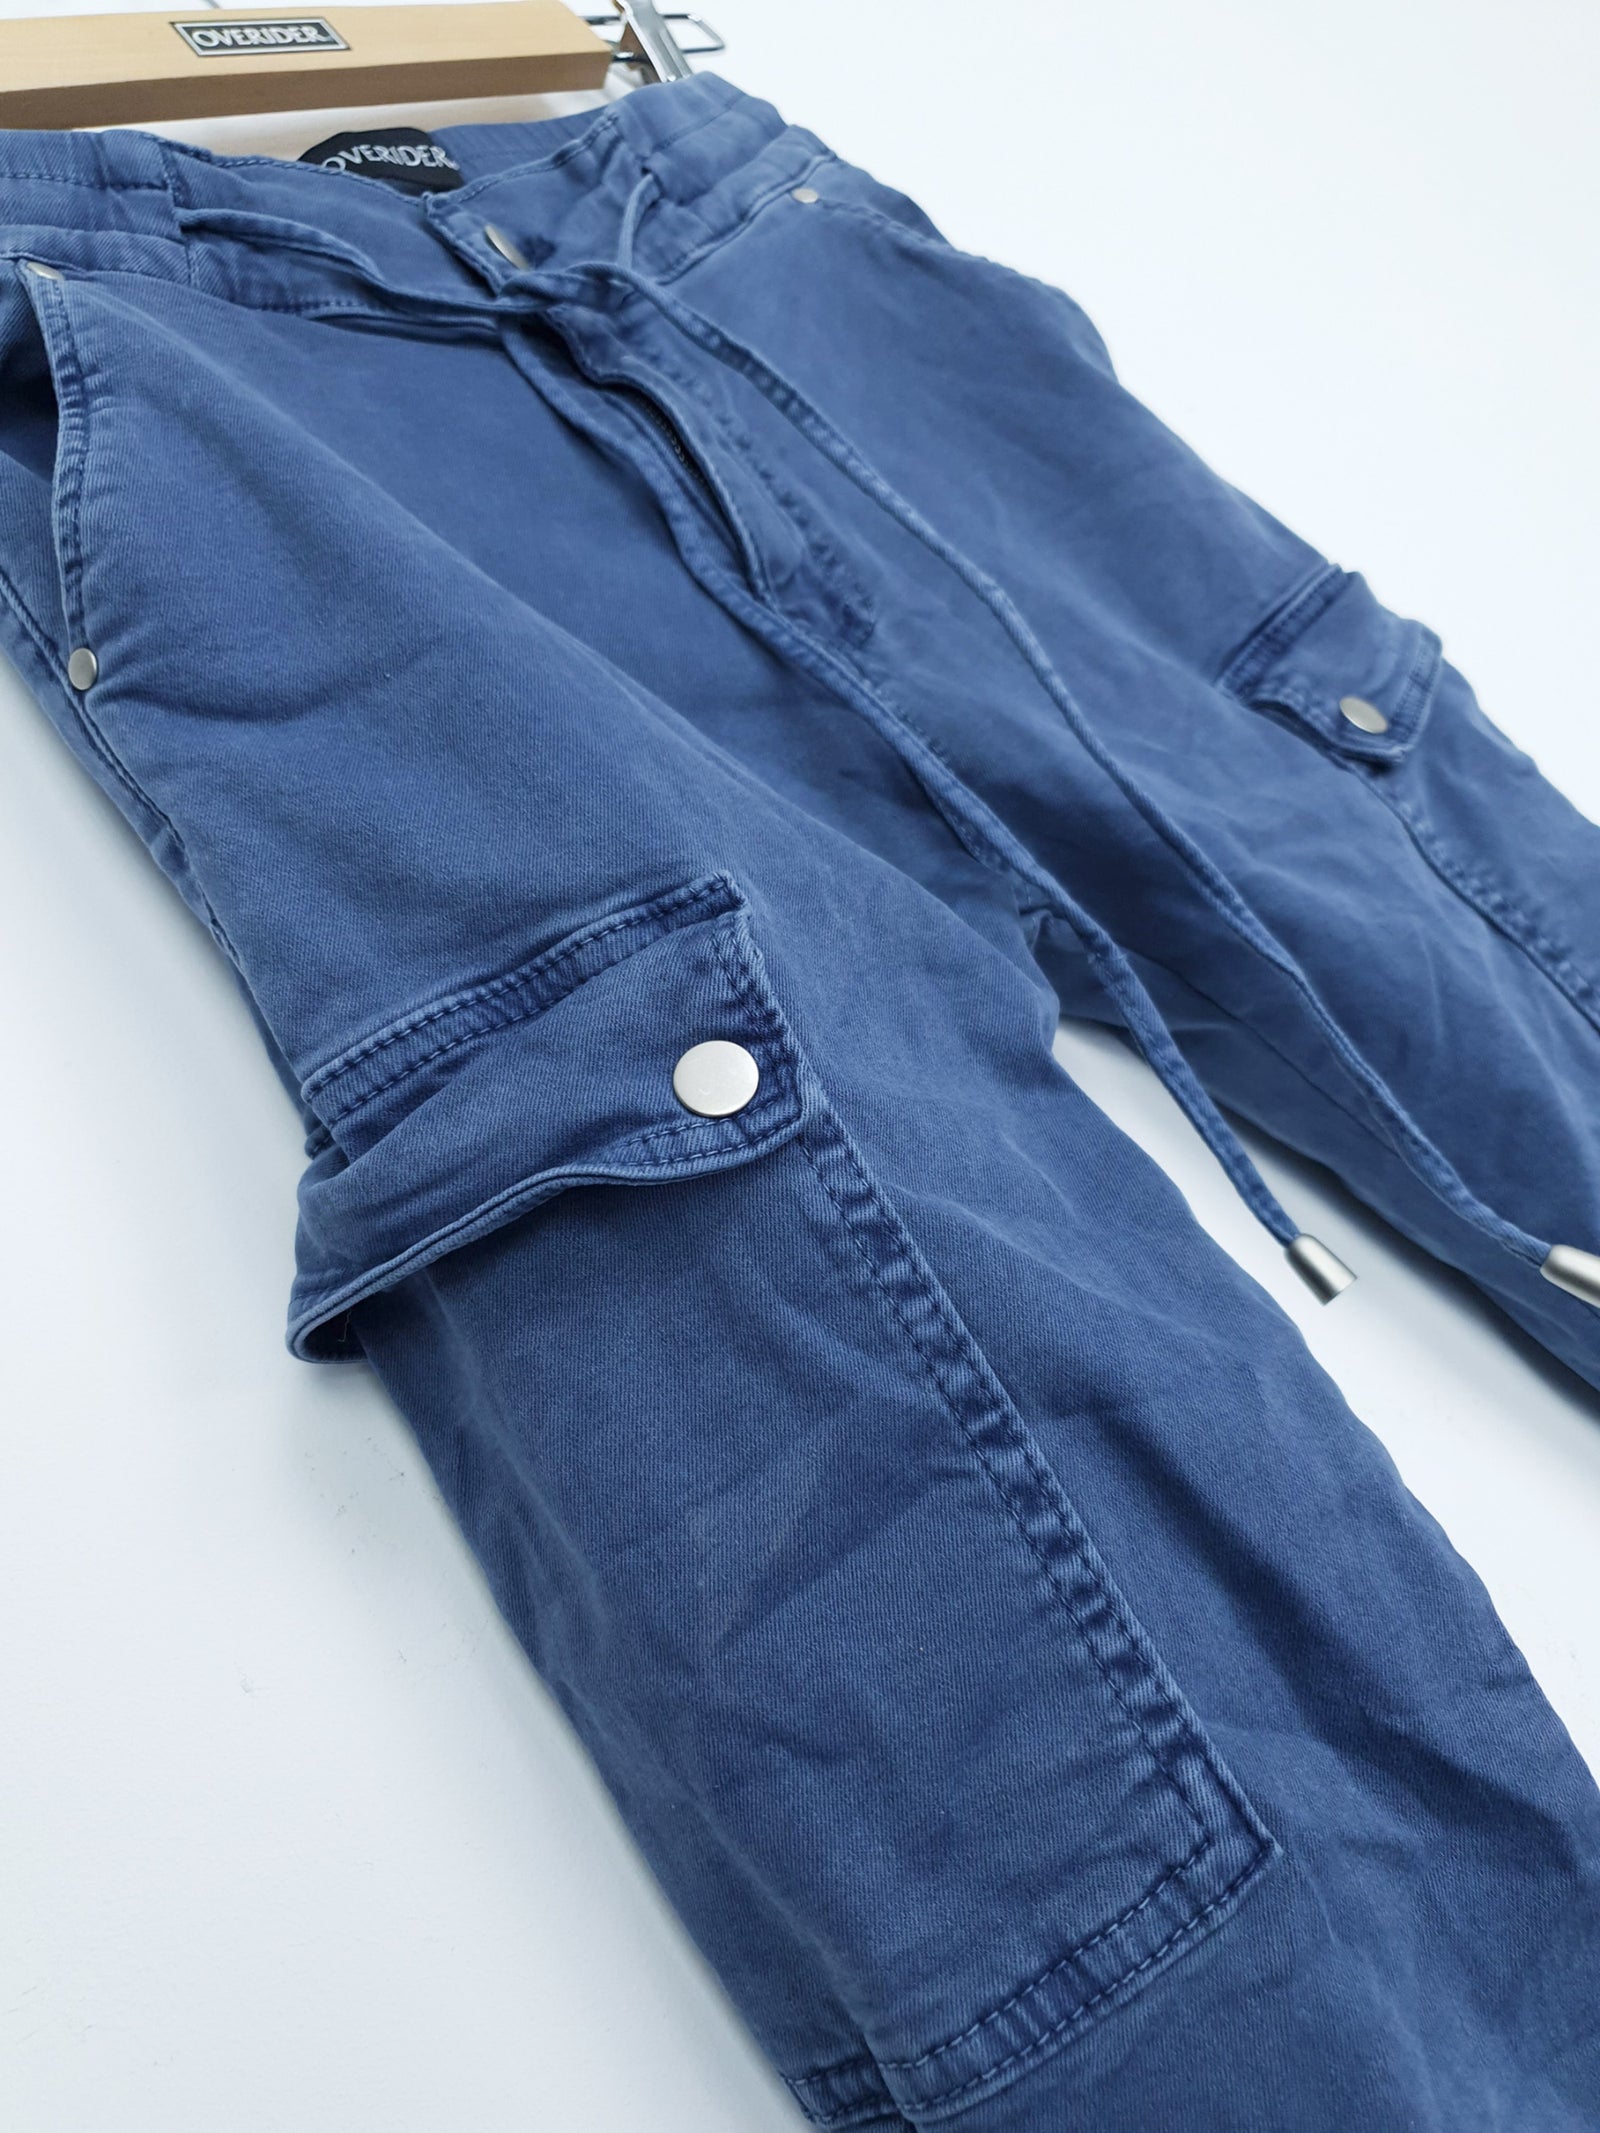 Mens Cargo Jeans Combat Trousers Heavy Duty Work Casual Big Tall Denim Pants  | eBay